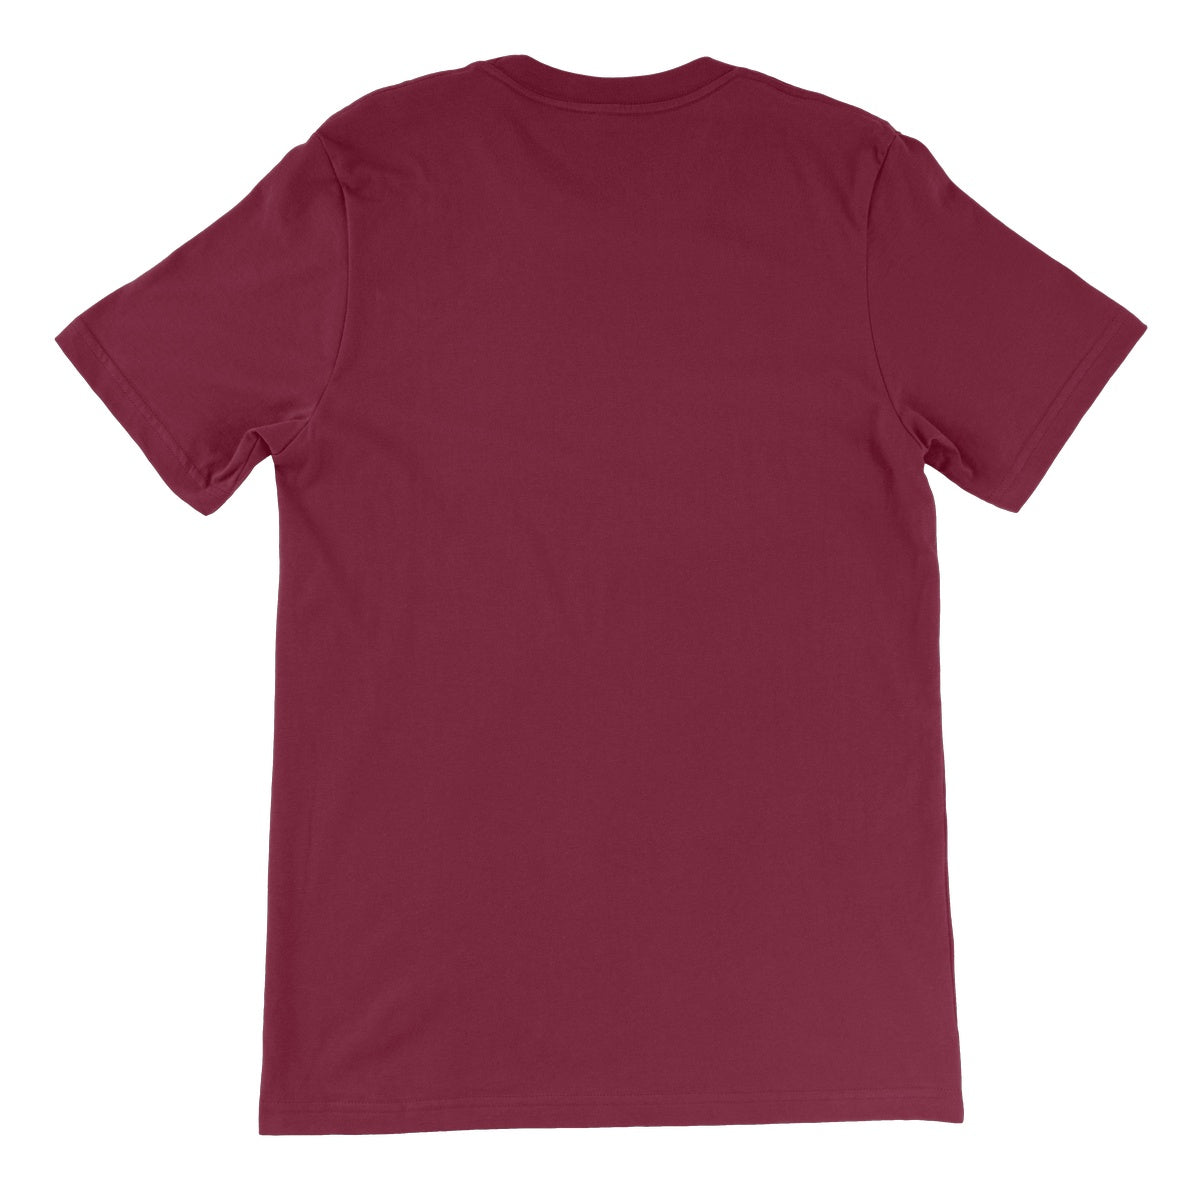 Innerspace Illustrated Tee Unisex Short Sleeve T-Shirt